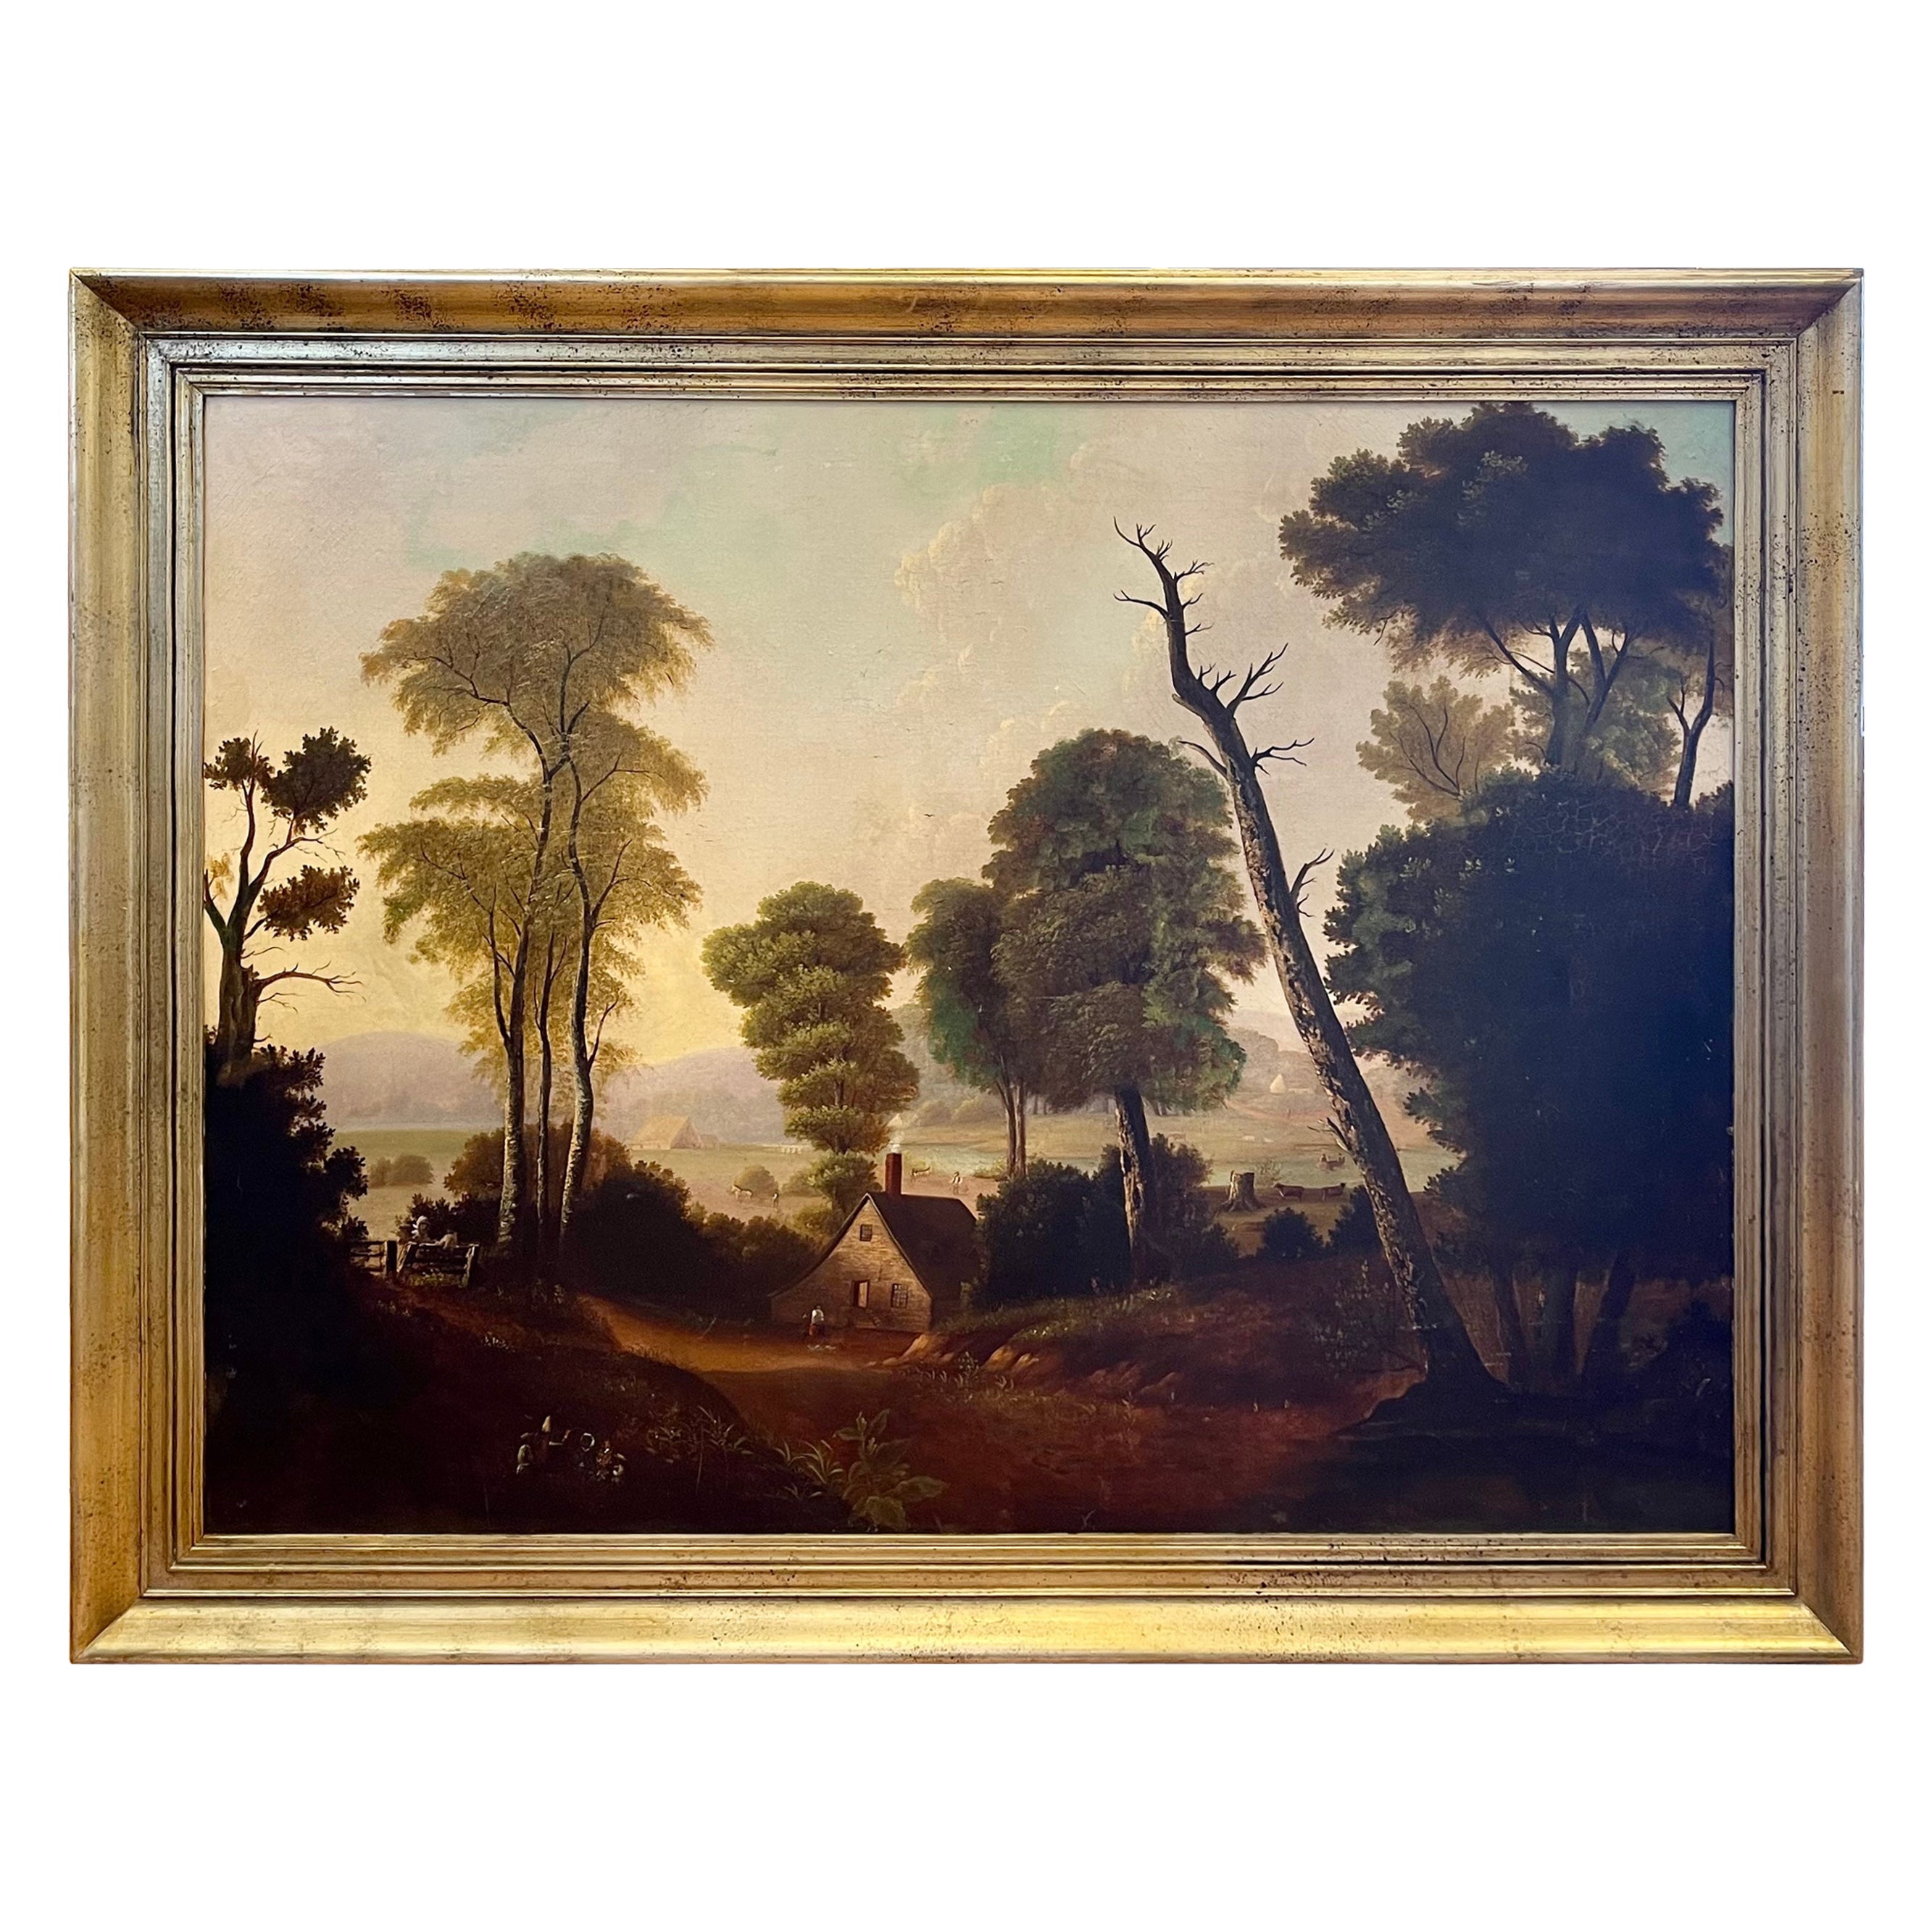 19th Century American Landscape Painting in Style of George Caleb Bingham